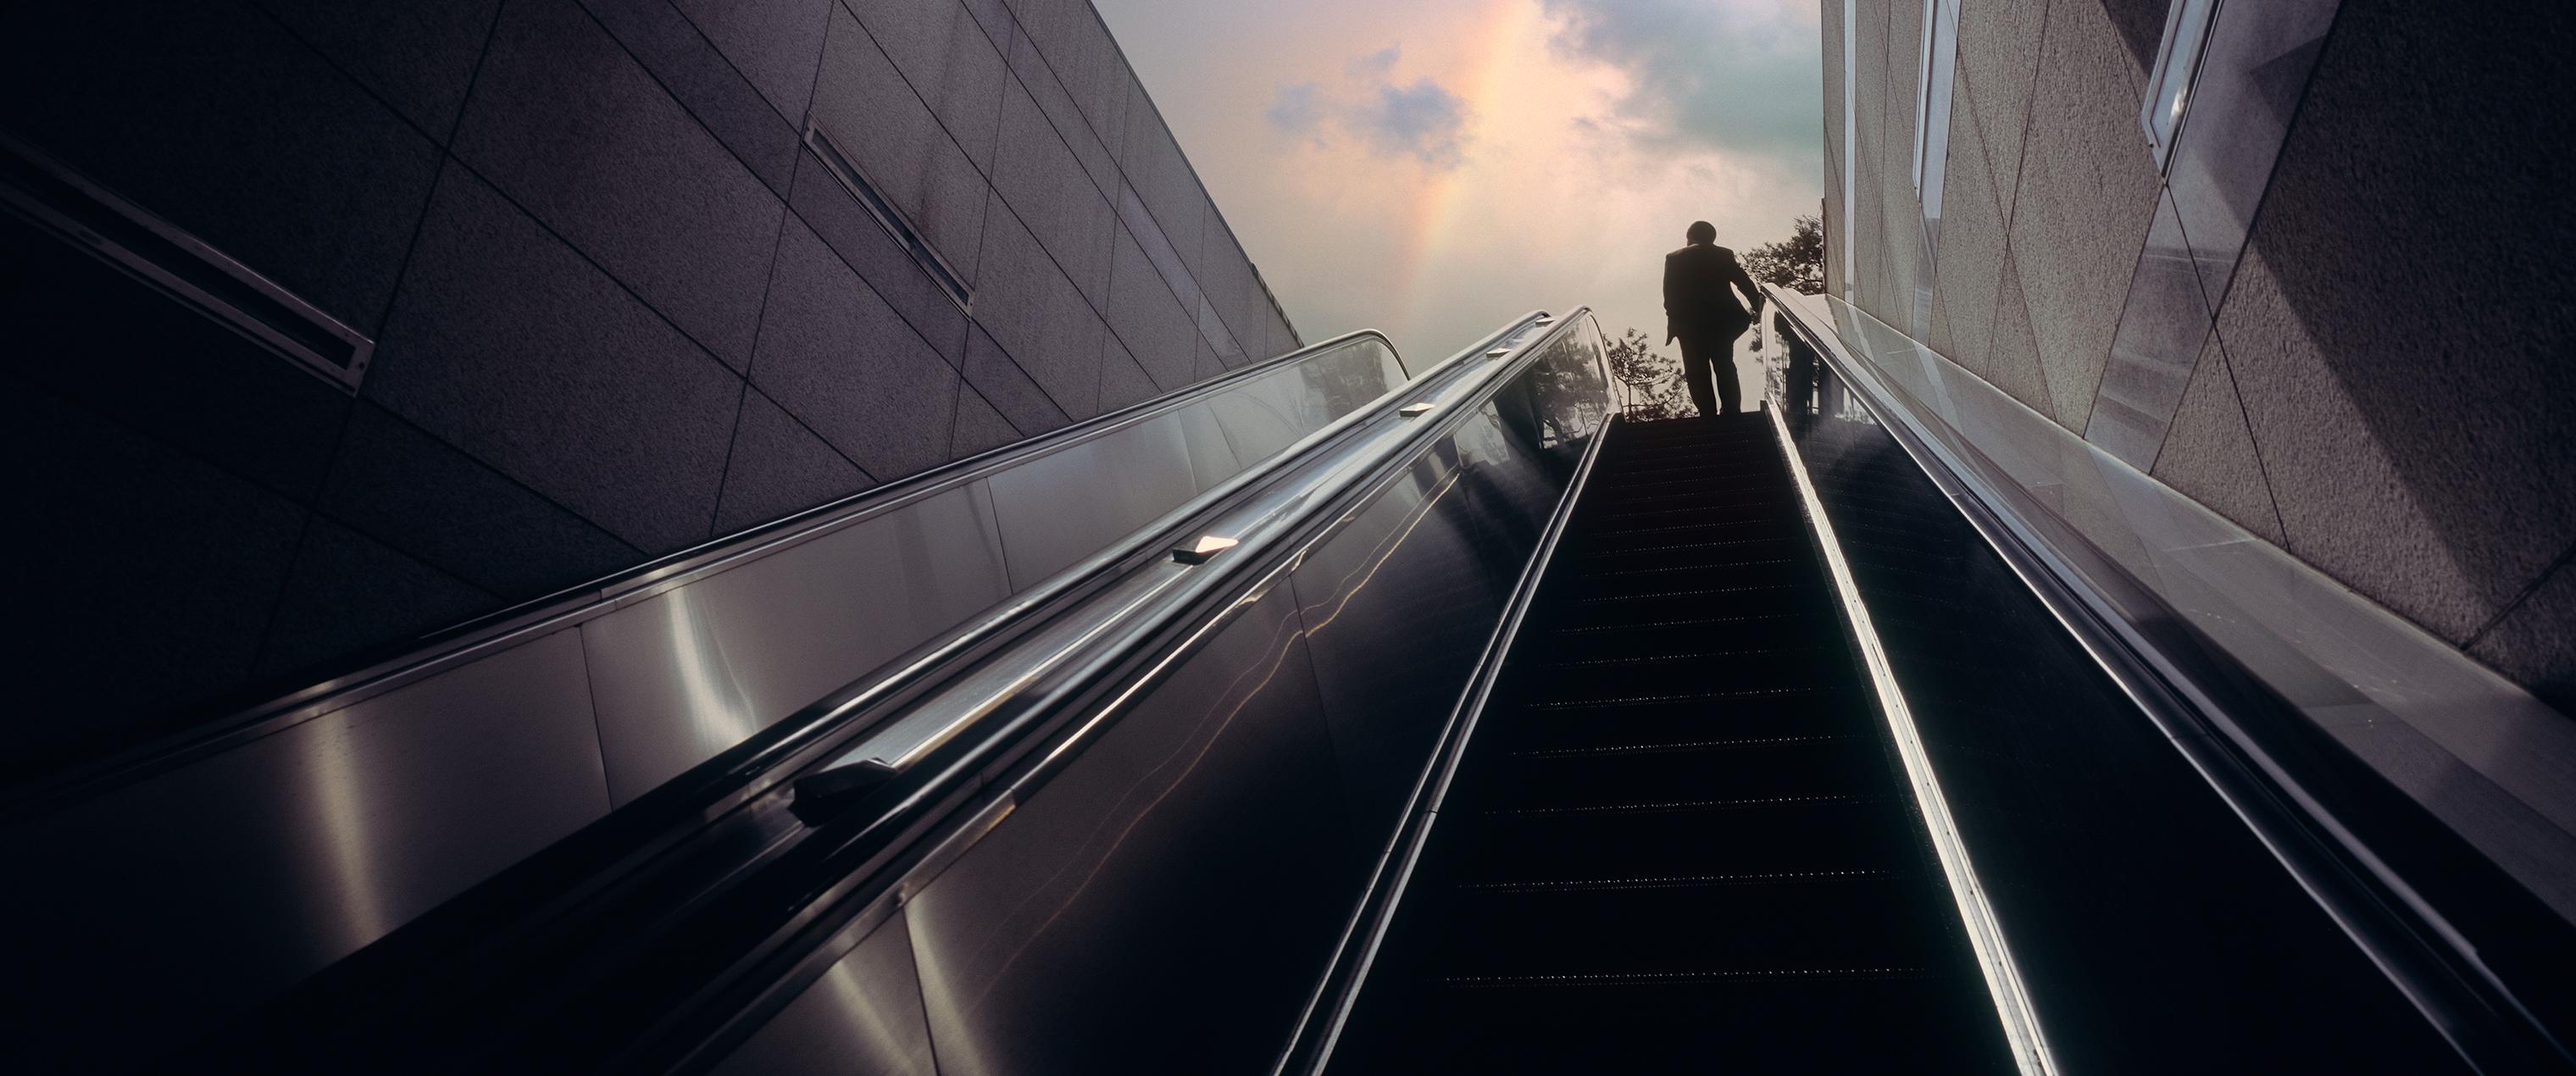 Man riding an escalator